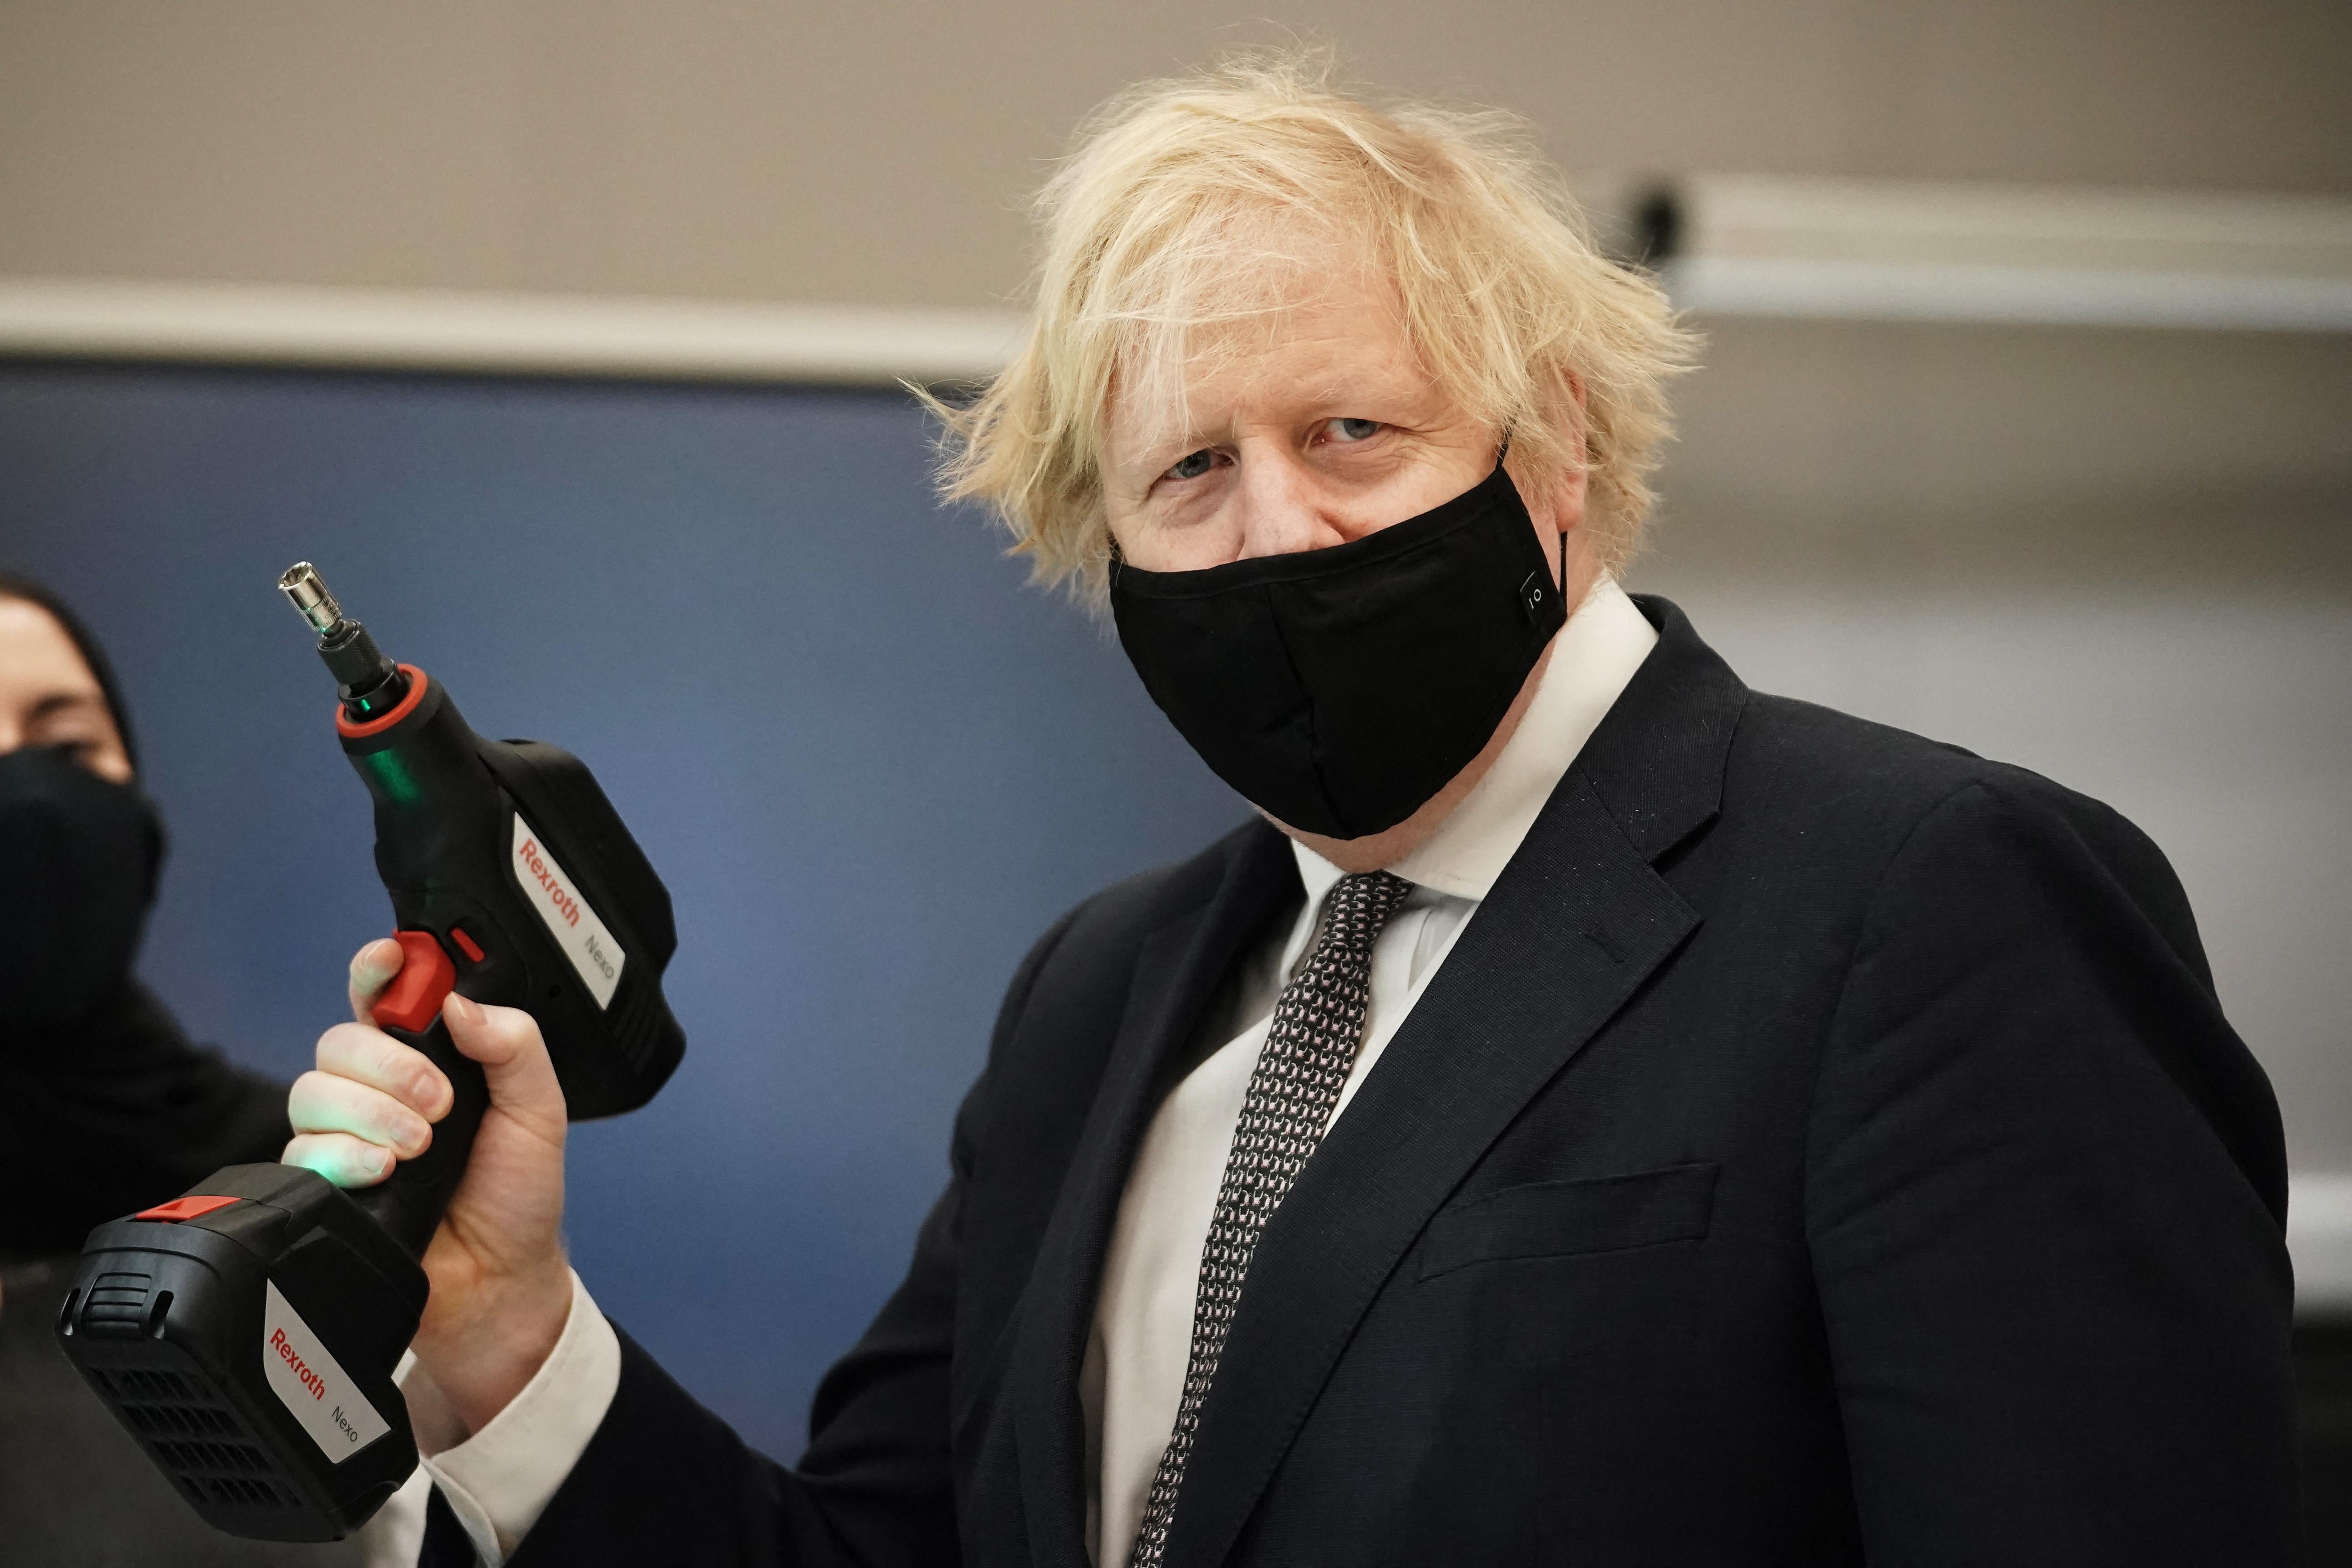 Boris Johnson holding a power drill.